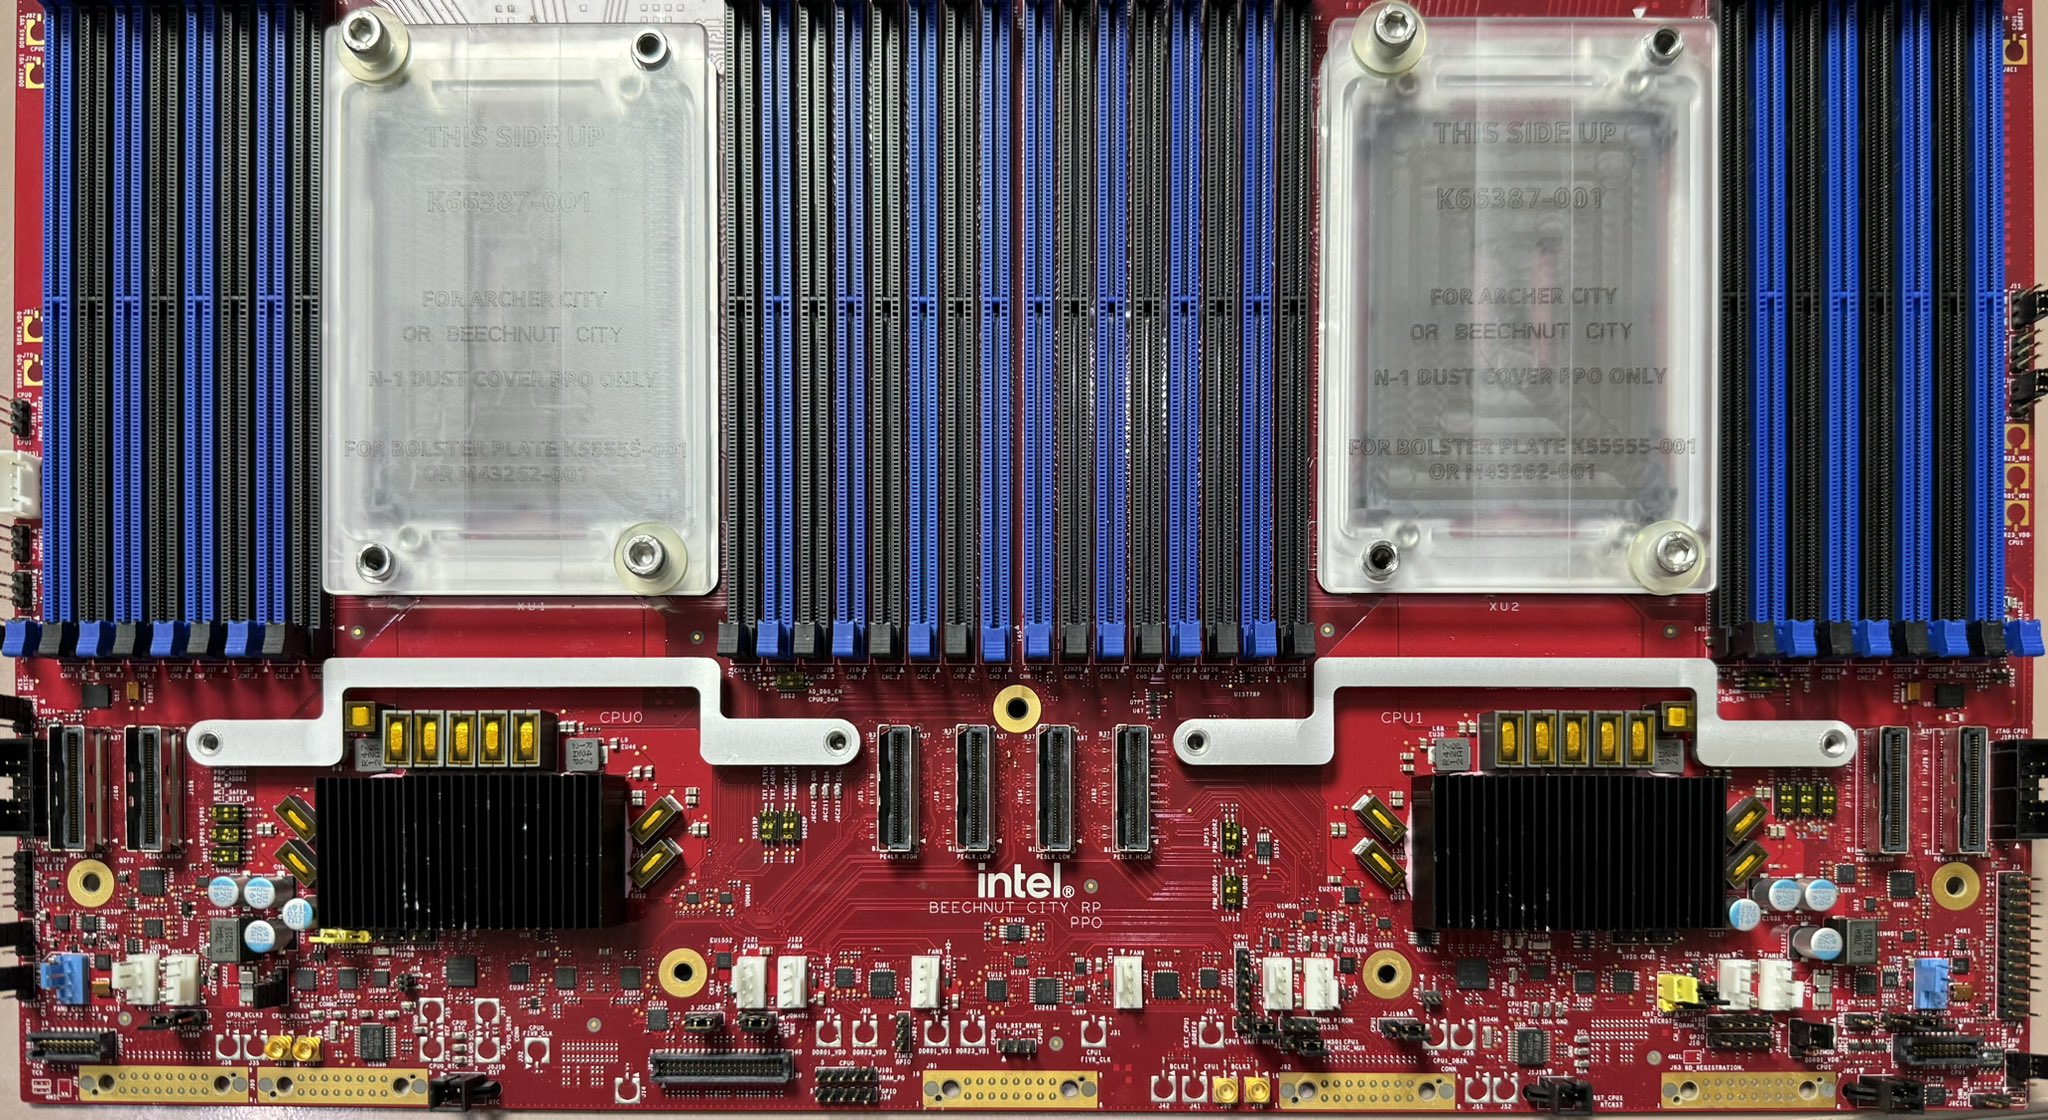 gllznvrbkaarmd7 หลุดภาพเมนบอร์ด Intel “Beechnut City” รุ่นใหม่ที่ออกมาสำหรับซีพียู Intel Xeon 6 “Granite Rapids” และ “Sierra Forest”